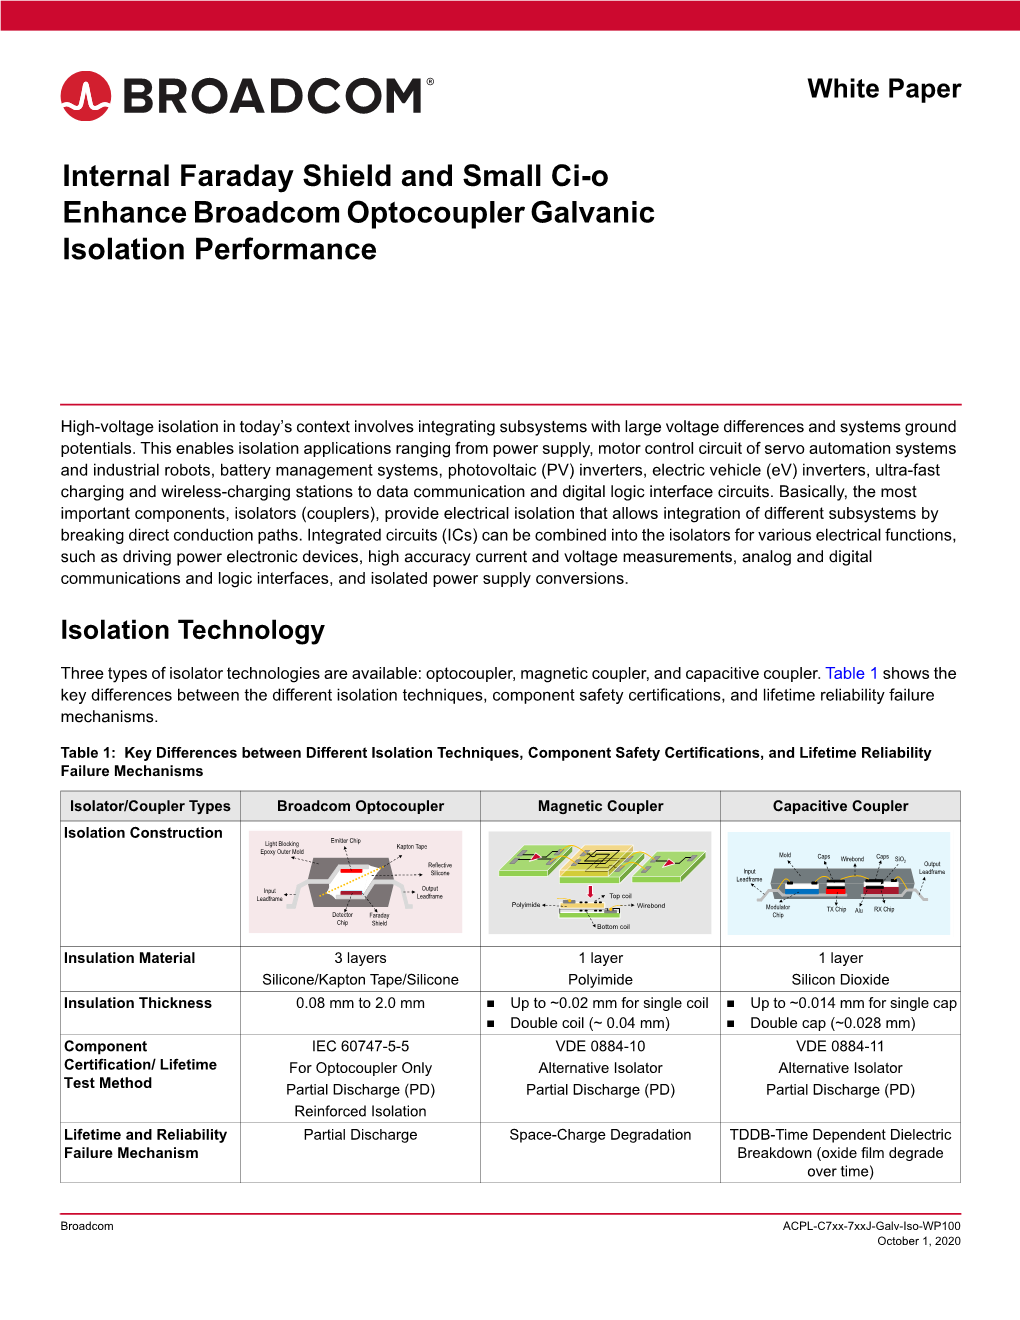 Internal Faraday Shield and Small Ci-O Enhance Broadcom Optocoupler Galvanic Isolation Performance